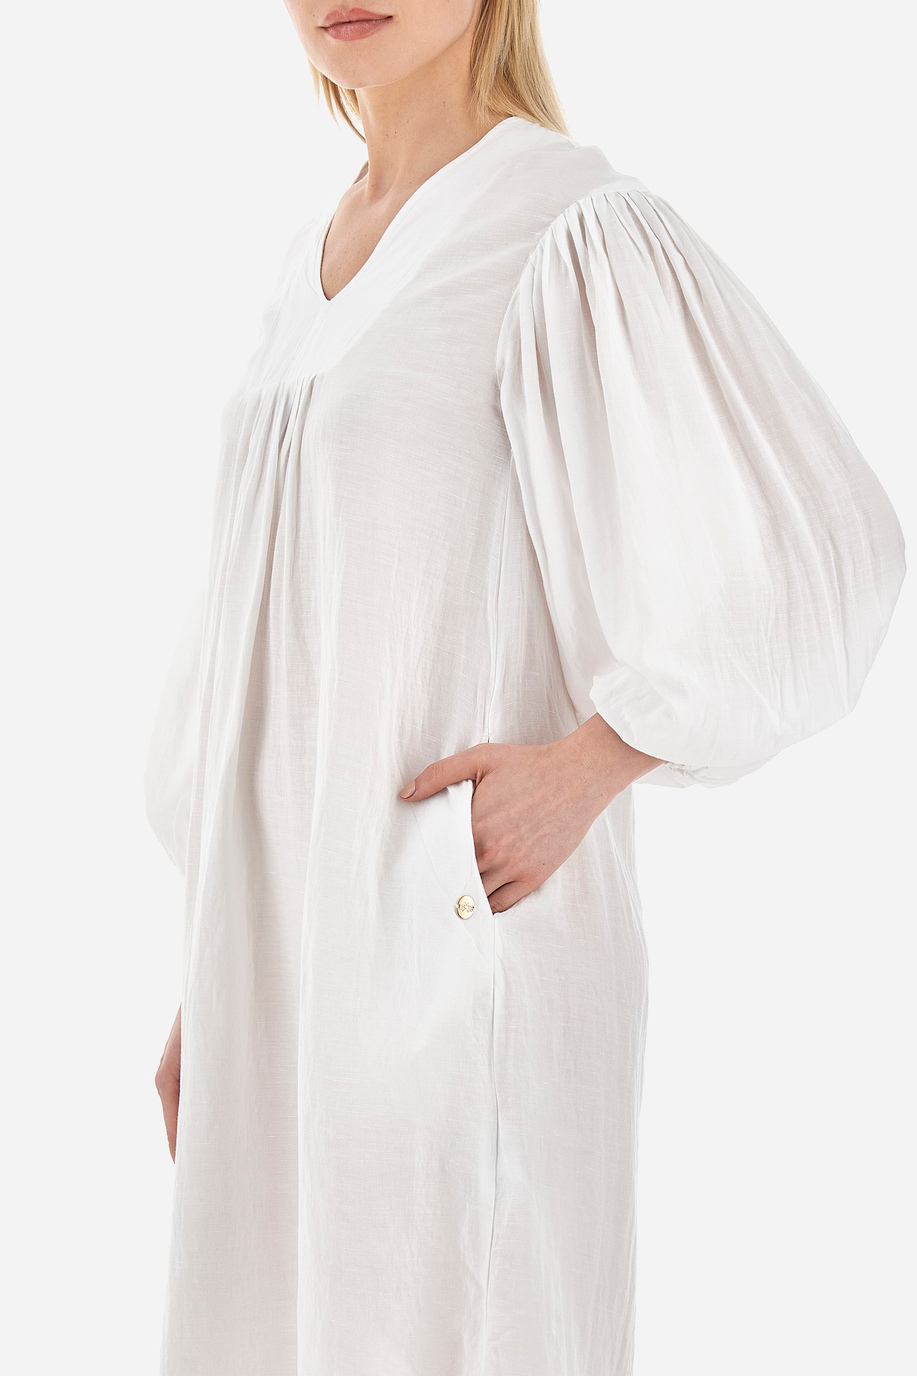 Robe femme en polylin, manches 3/4 - Valaria | La Martina - Official Online Shop